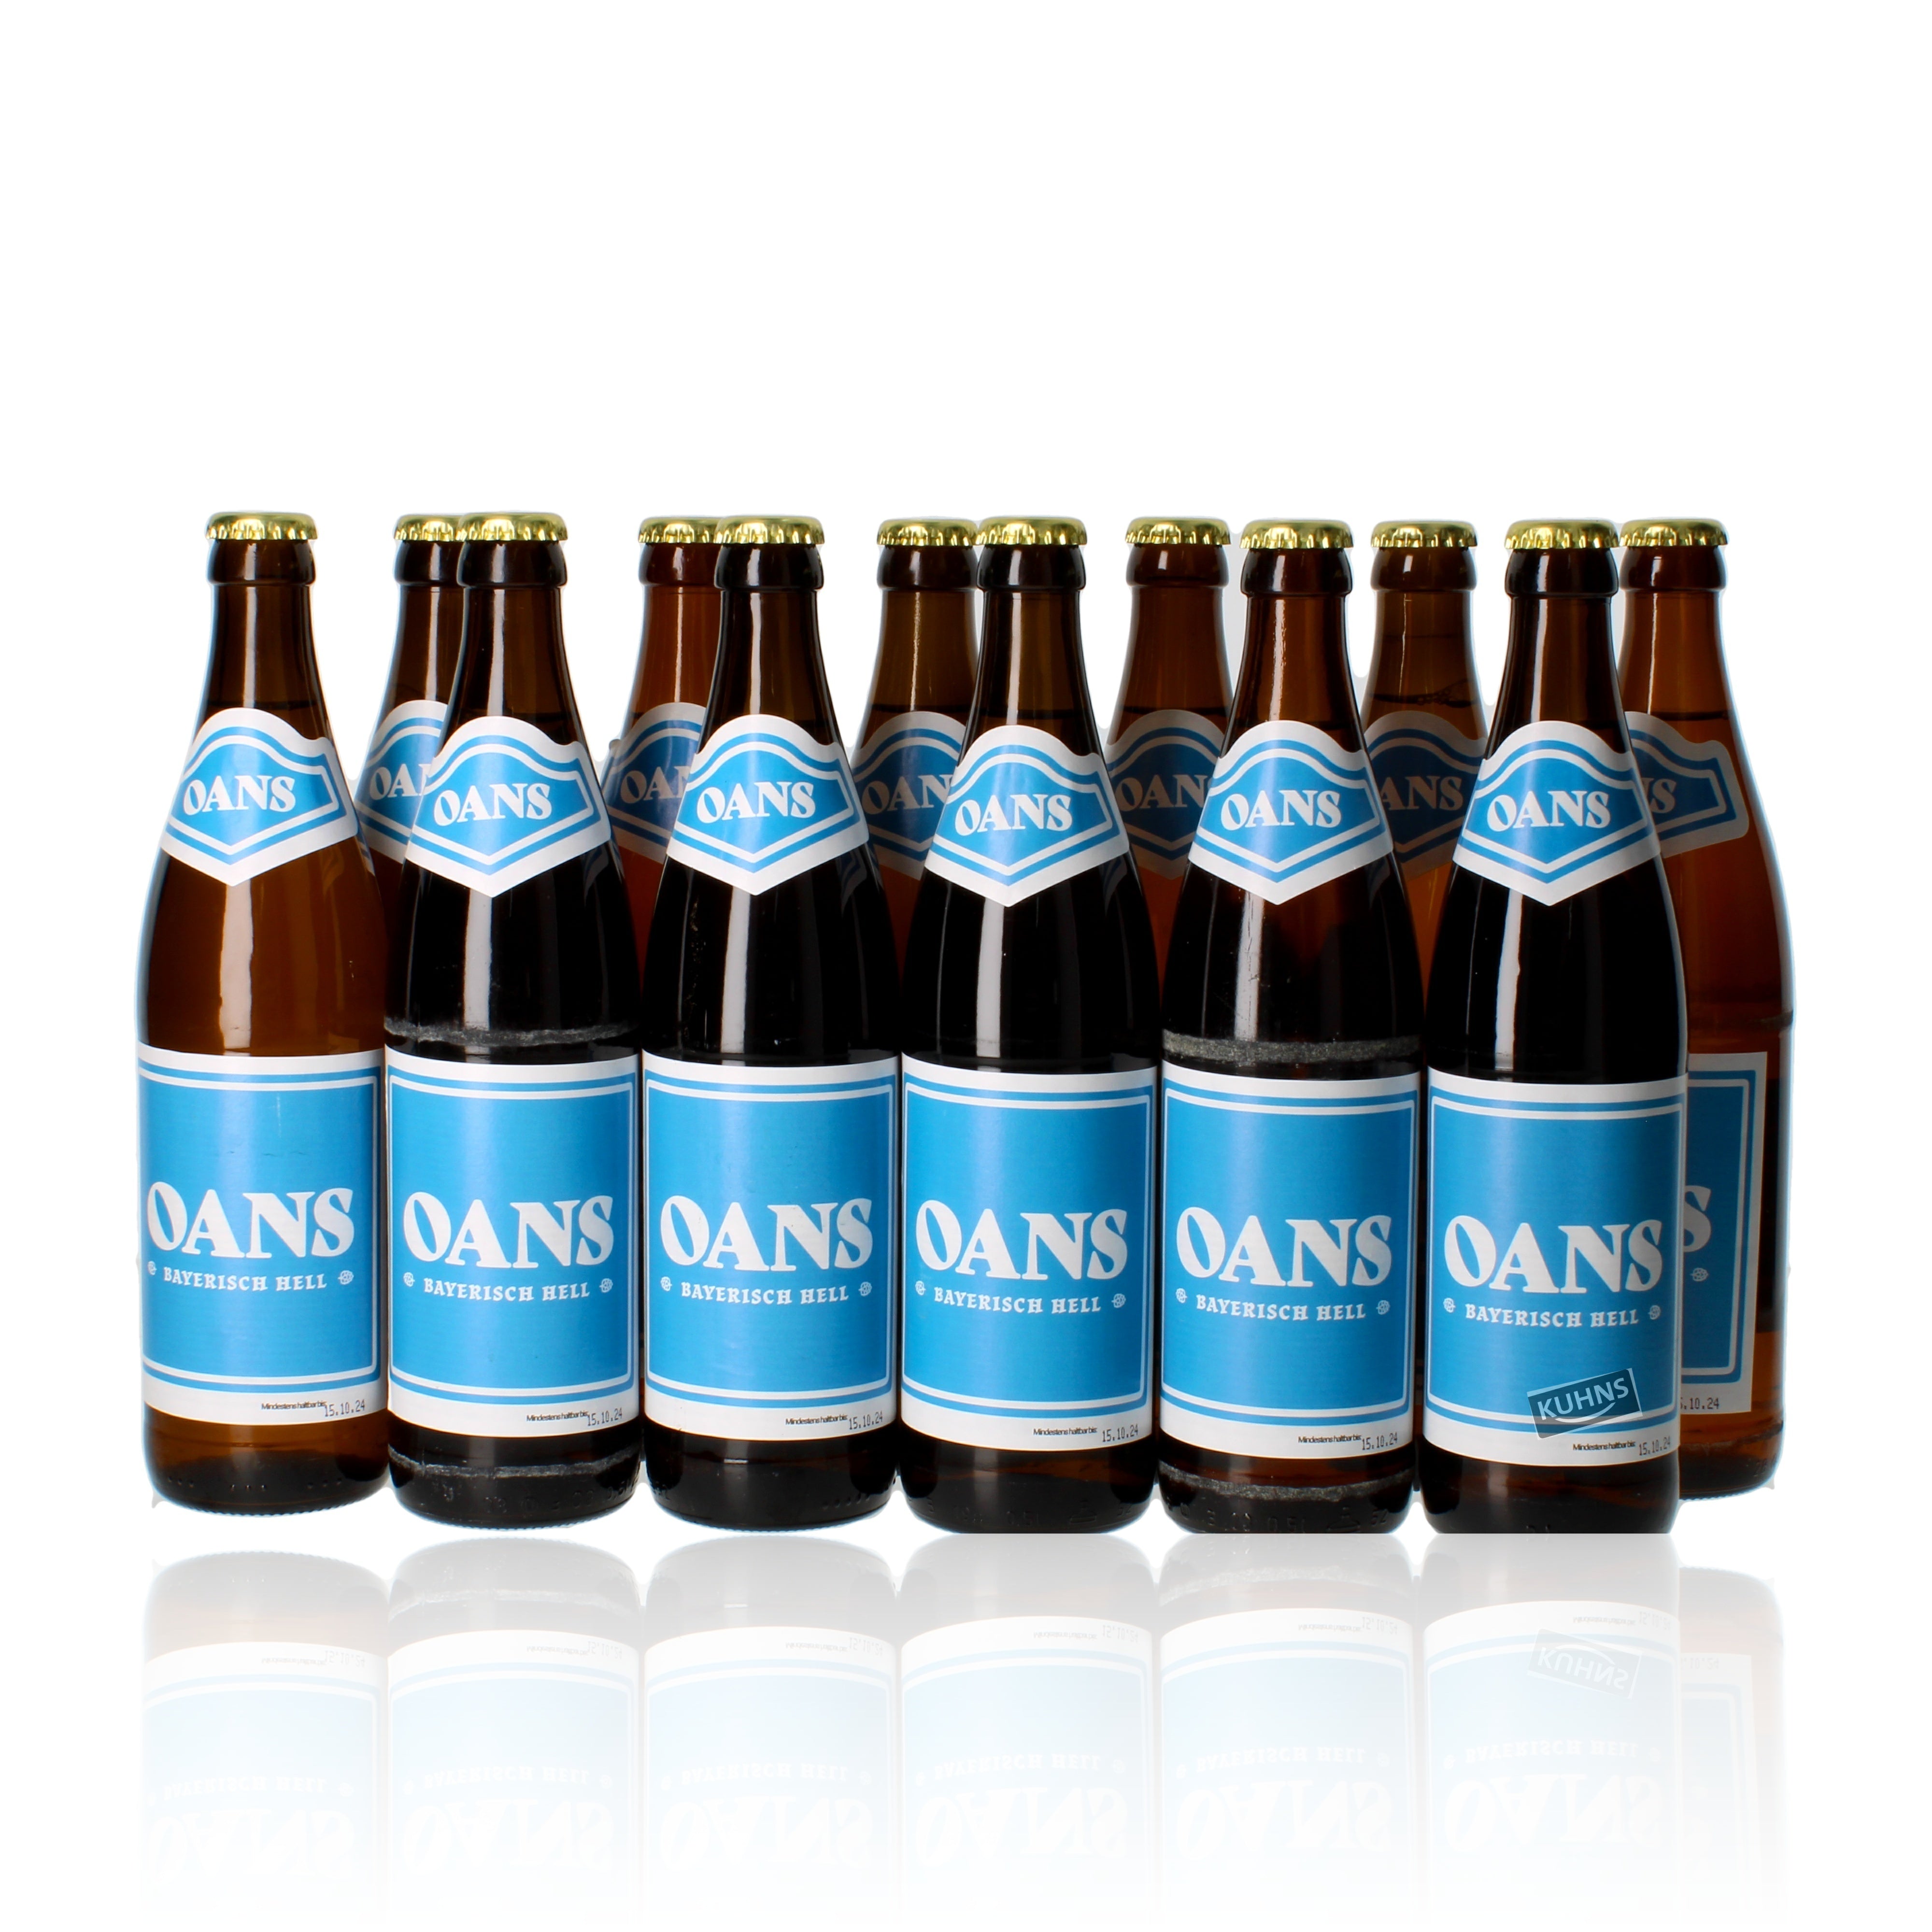 OANS - The new delicious beer, alc.4.9 Vol.-%, 12x0.5l